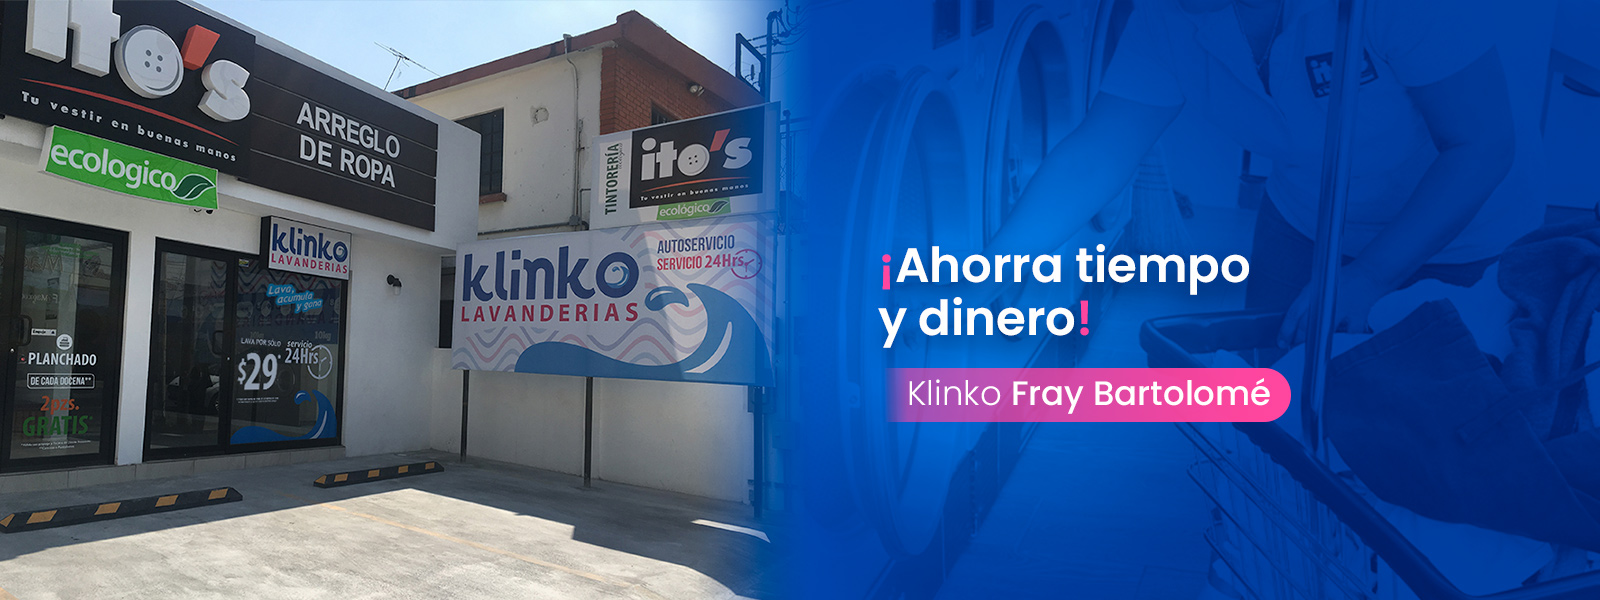 You are currently viewing Klinko Fray Bartoloné (el Roble)